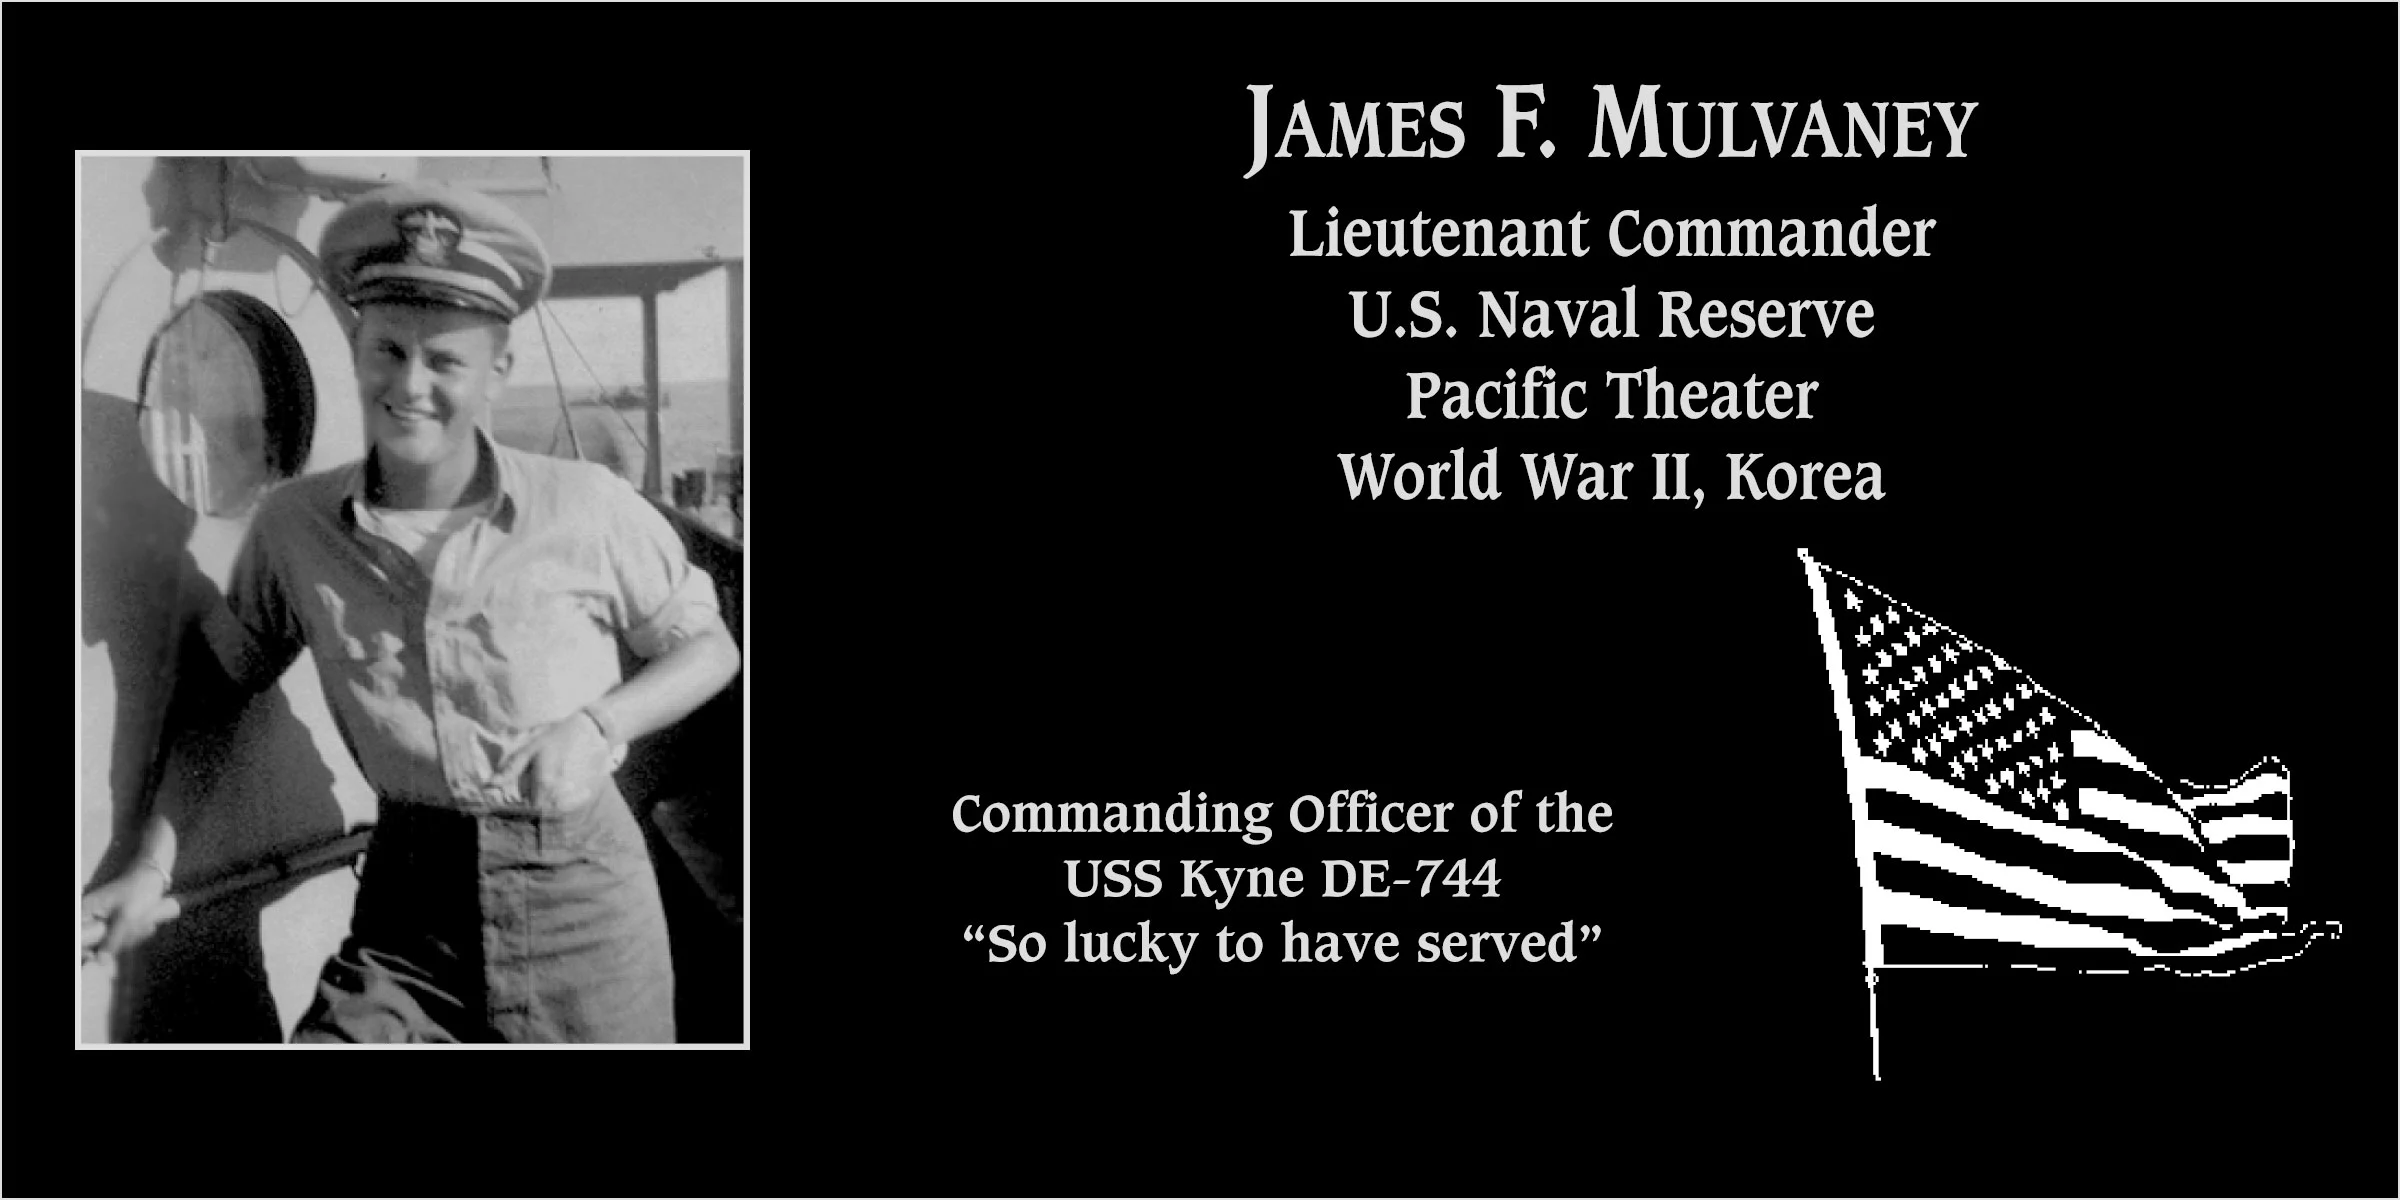 James F. Mulvaney